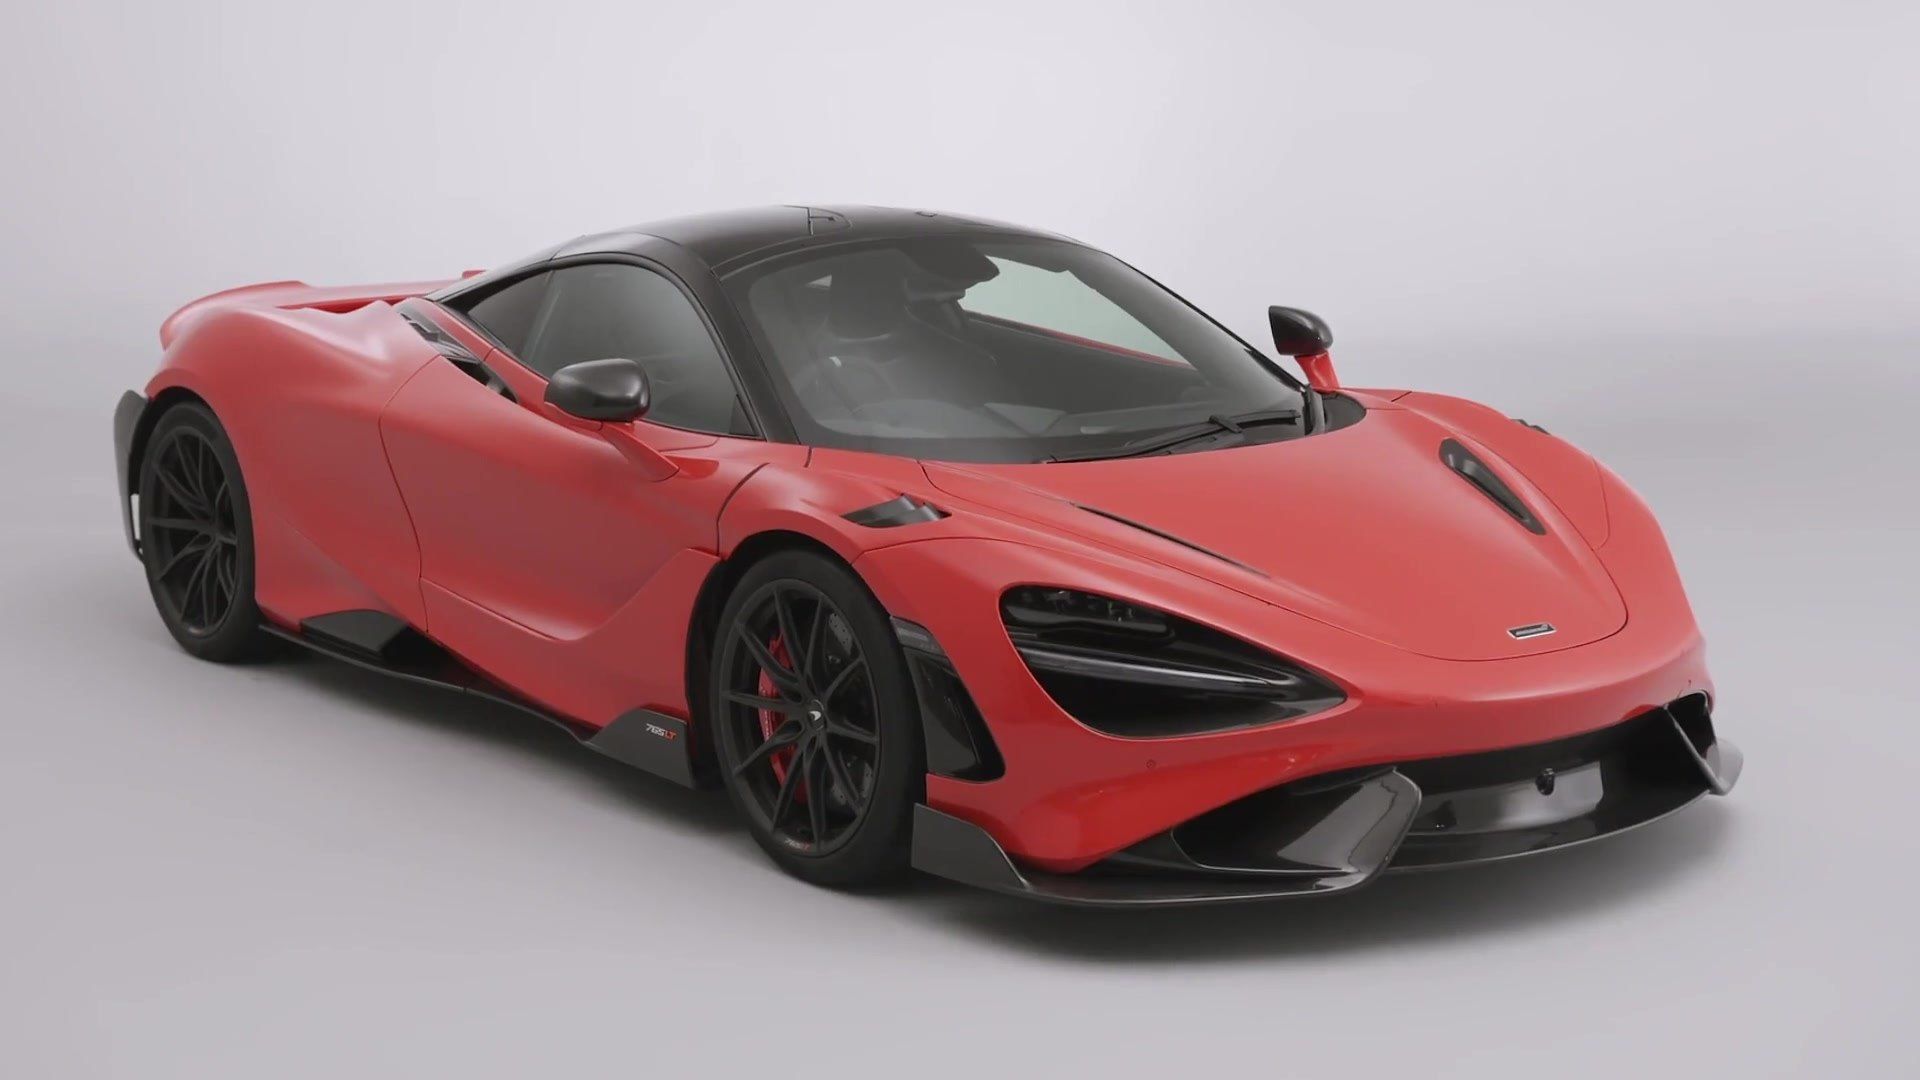 The new McLaren 765LT Design Preview